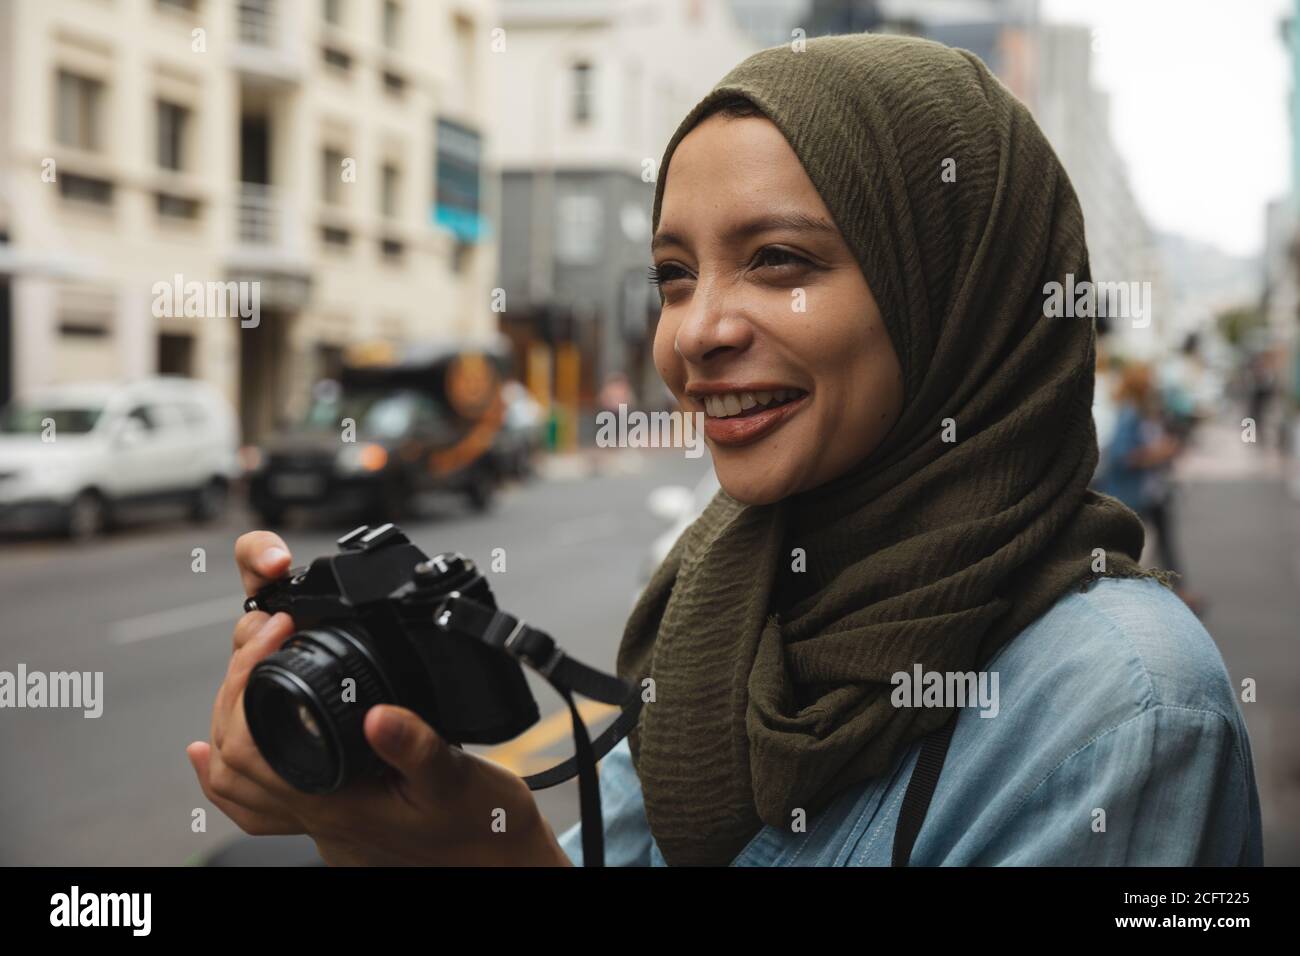 Woman in hijab taking photos using digital camera on the street Stock Photo